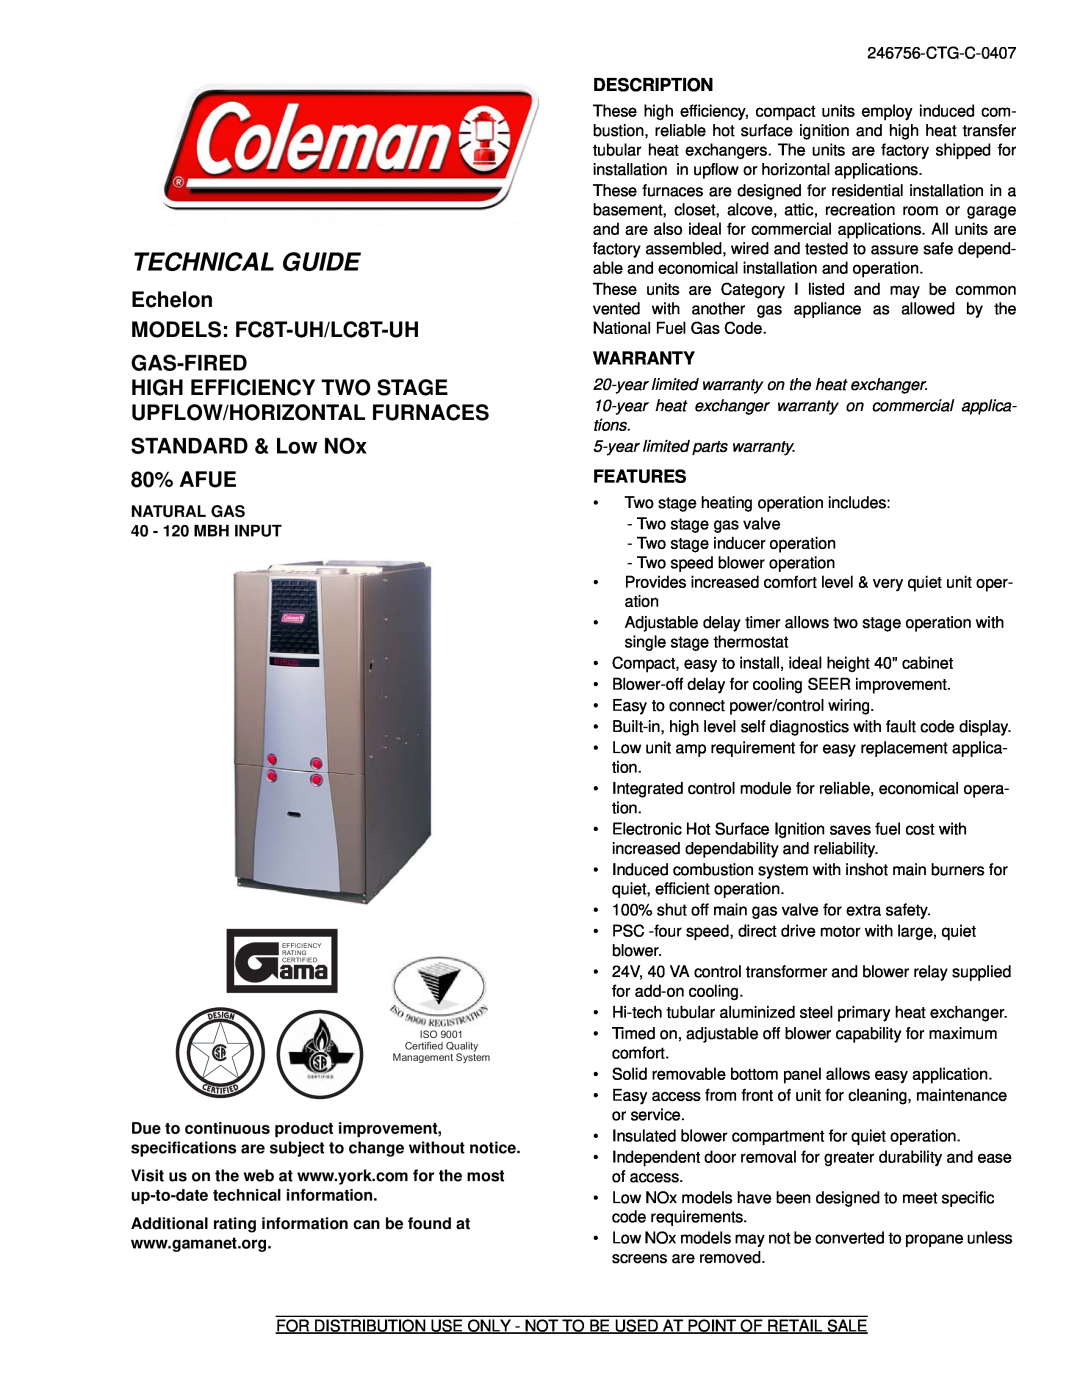 Coleman FC8T-UH, LC8T-UH warranty Description, Warranty, Features, NATURAL GAS 40 - 120 MBH INPUT, Technical Guide 